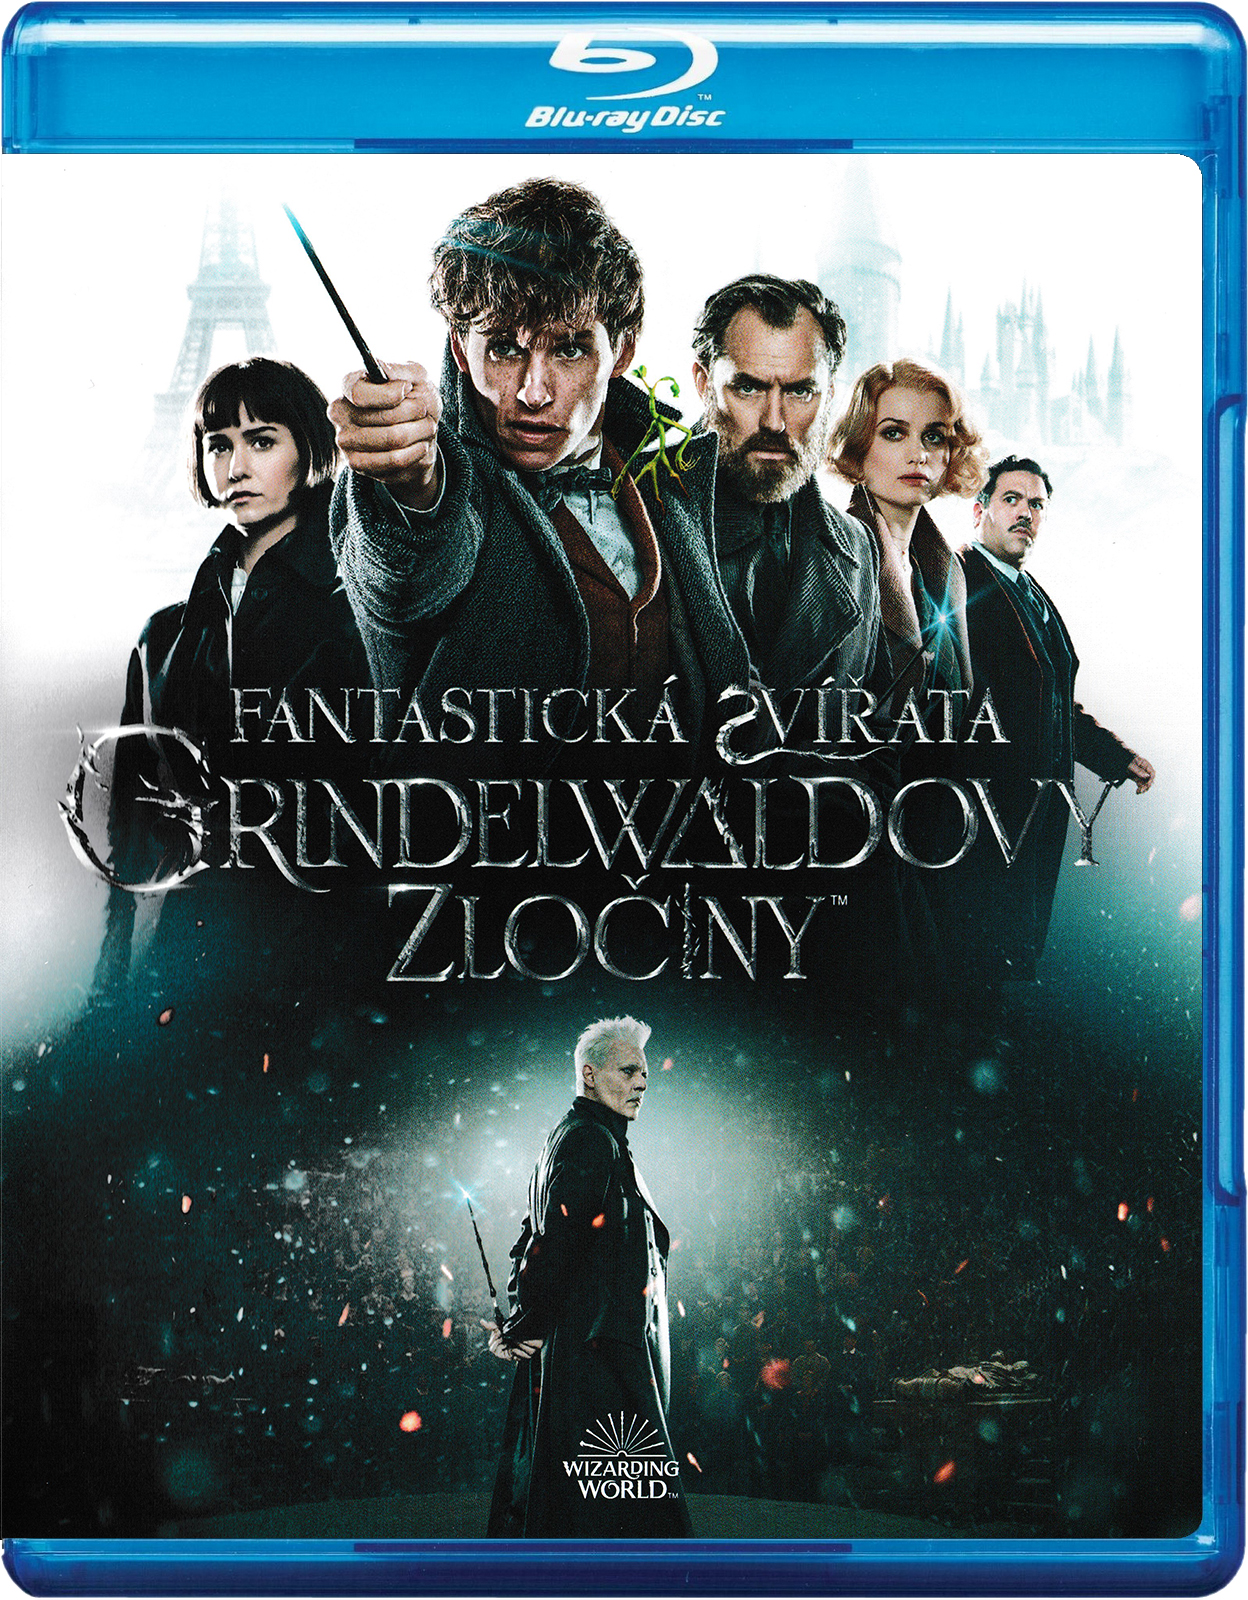 Stiahni si HD Filmy Fantasticka zvirata: Grindelwaldovy zlociny/ Fantastic Beasts: The Crimes of Grindelwald (2018)(CZ/EN)[1080pHD] = CSFD 64%